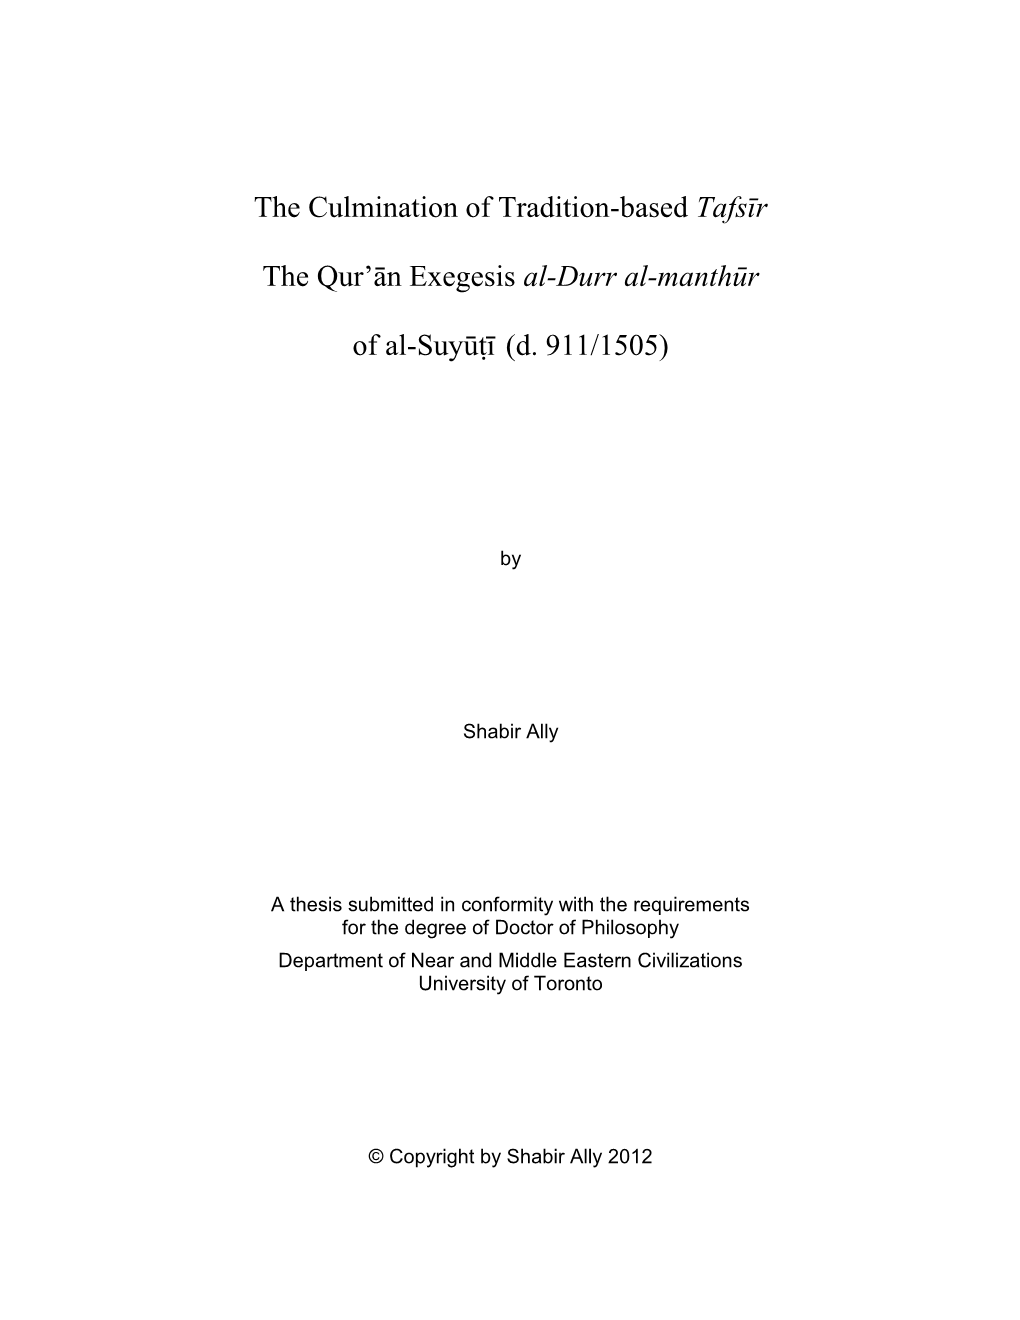 The Culmination of Tradition-Based Tafsīr the Qurʼān Exegesis Al-Durr Al-Manthūr of Al-Suyūṭī (D. 911/1505)